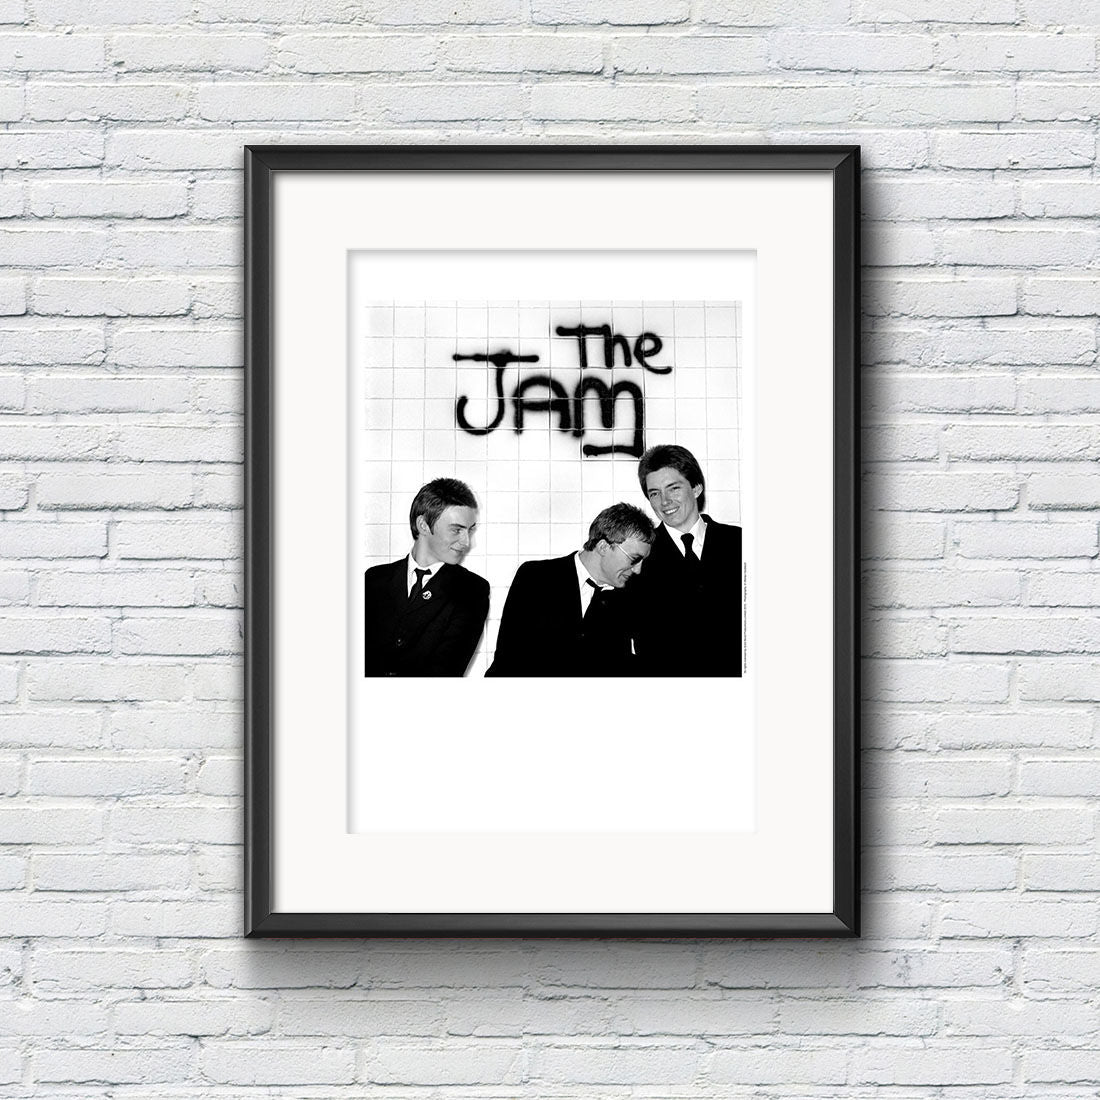 The Jam - The Jam A2 Wall Litho Print